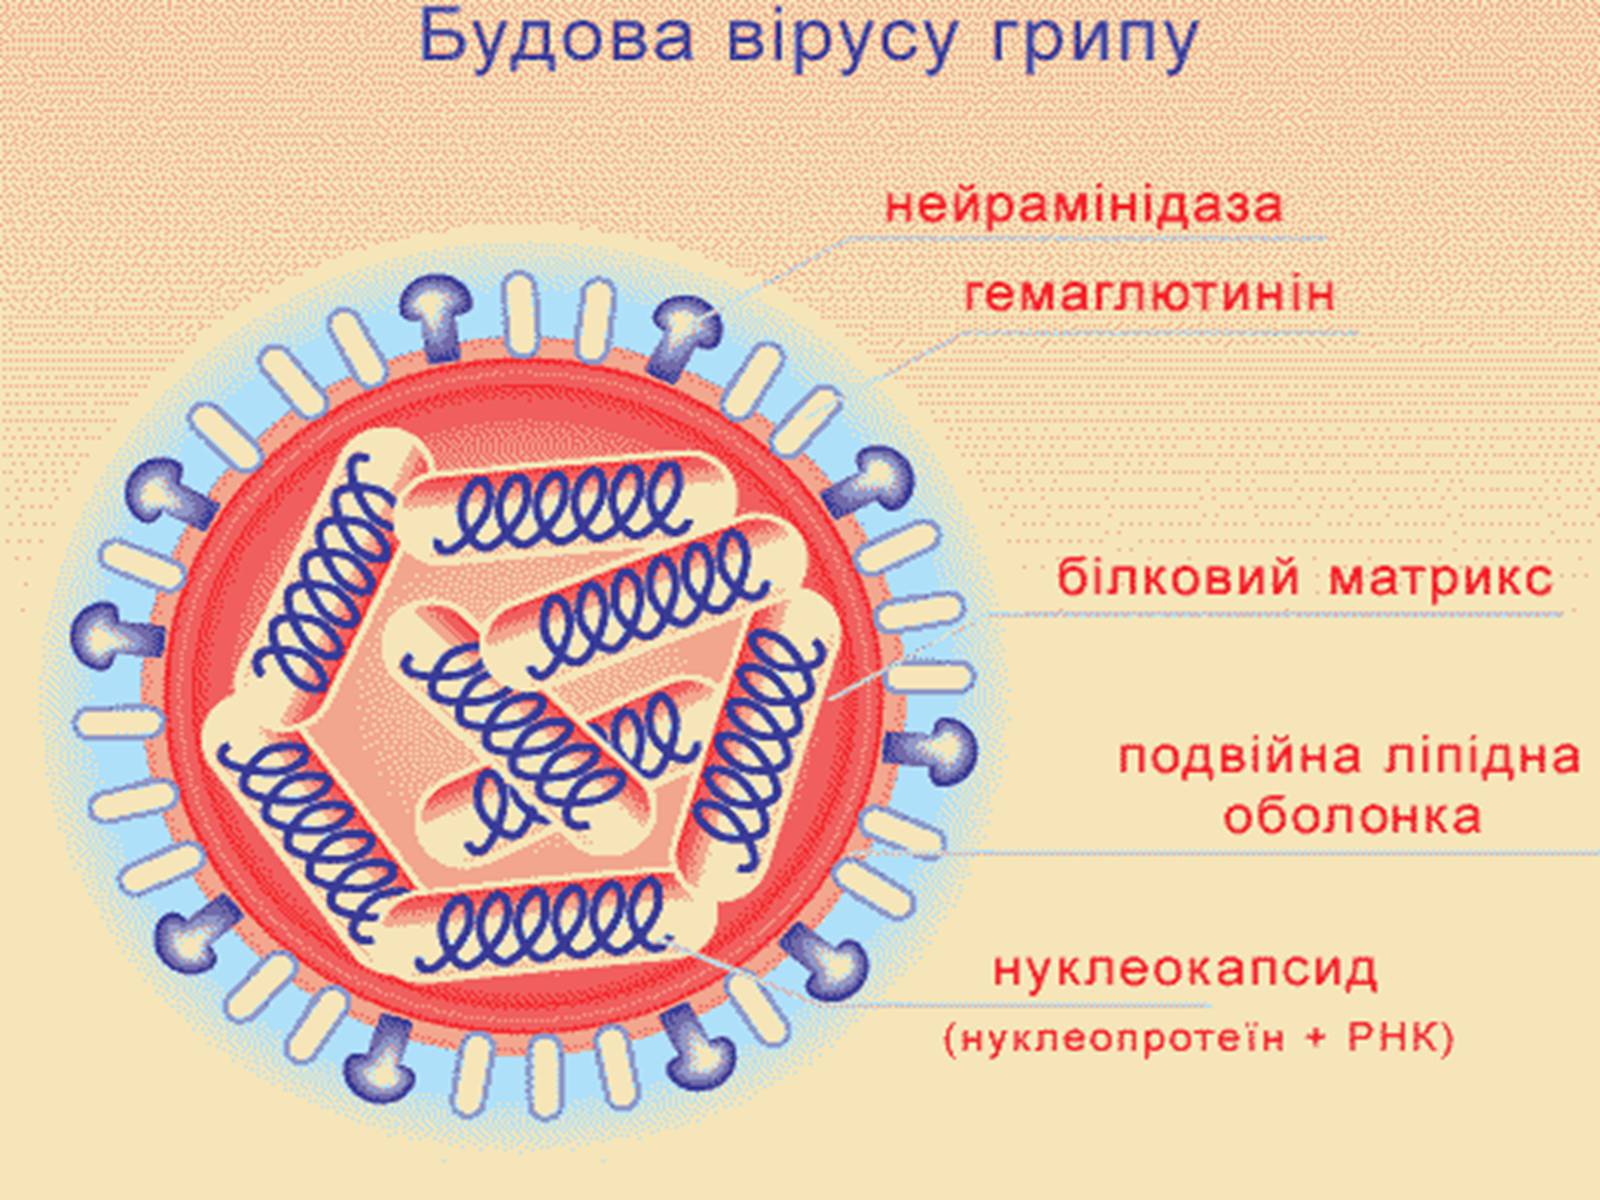 Группа вирусов гриппа. Структура вириона вируса гриппа. Строение вириона гриппа типа а. Структура вируса гриппа микробиология. Вирус гриппа строение биология.